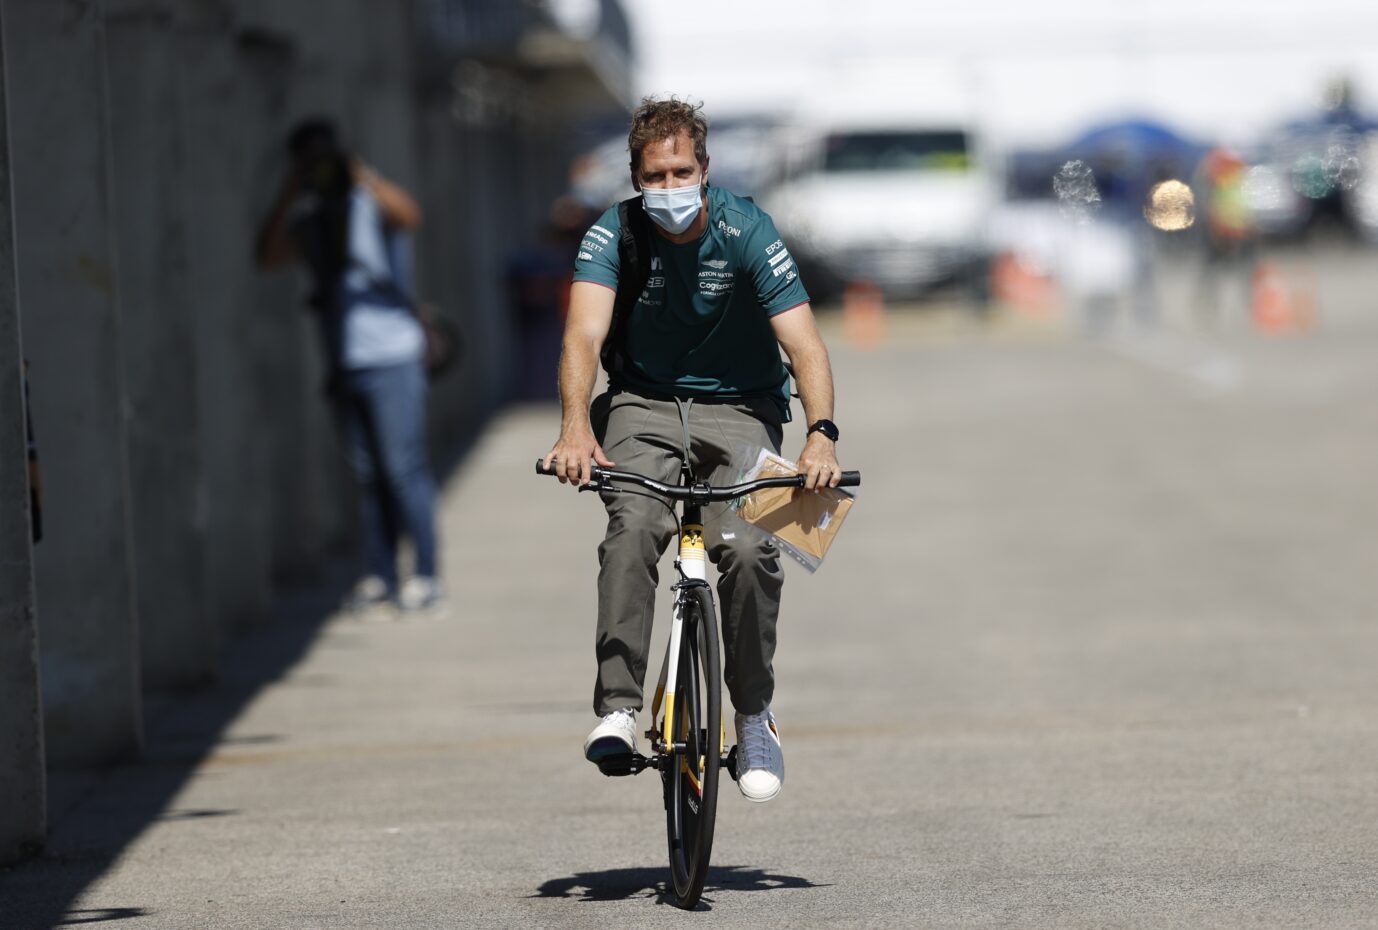 Formel-1-Pilot Sebastian Vettel mit umweltfreundlichem fahrbaren Untersatz in Ungarn Foto: picture alliance / REUTERS | Florion Goga